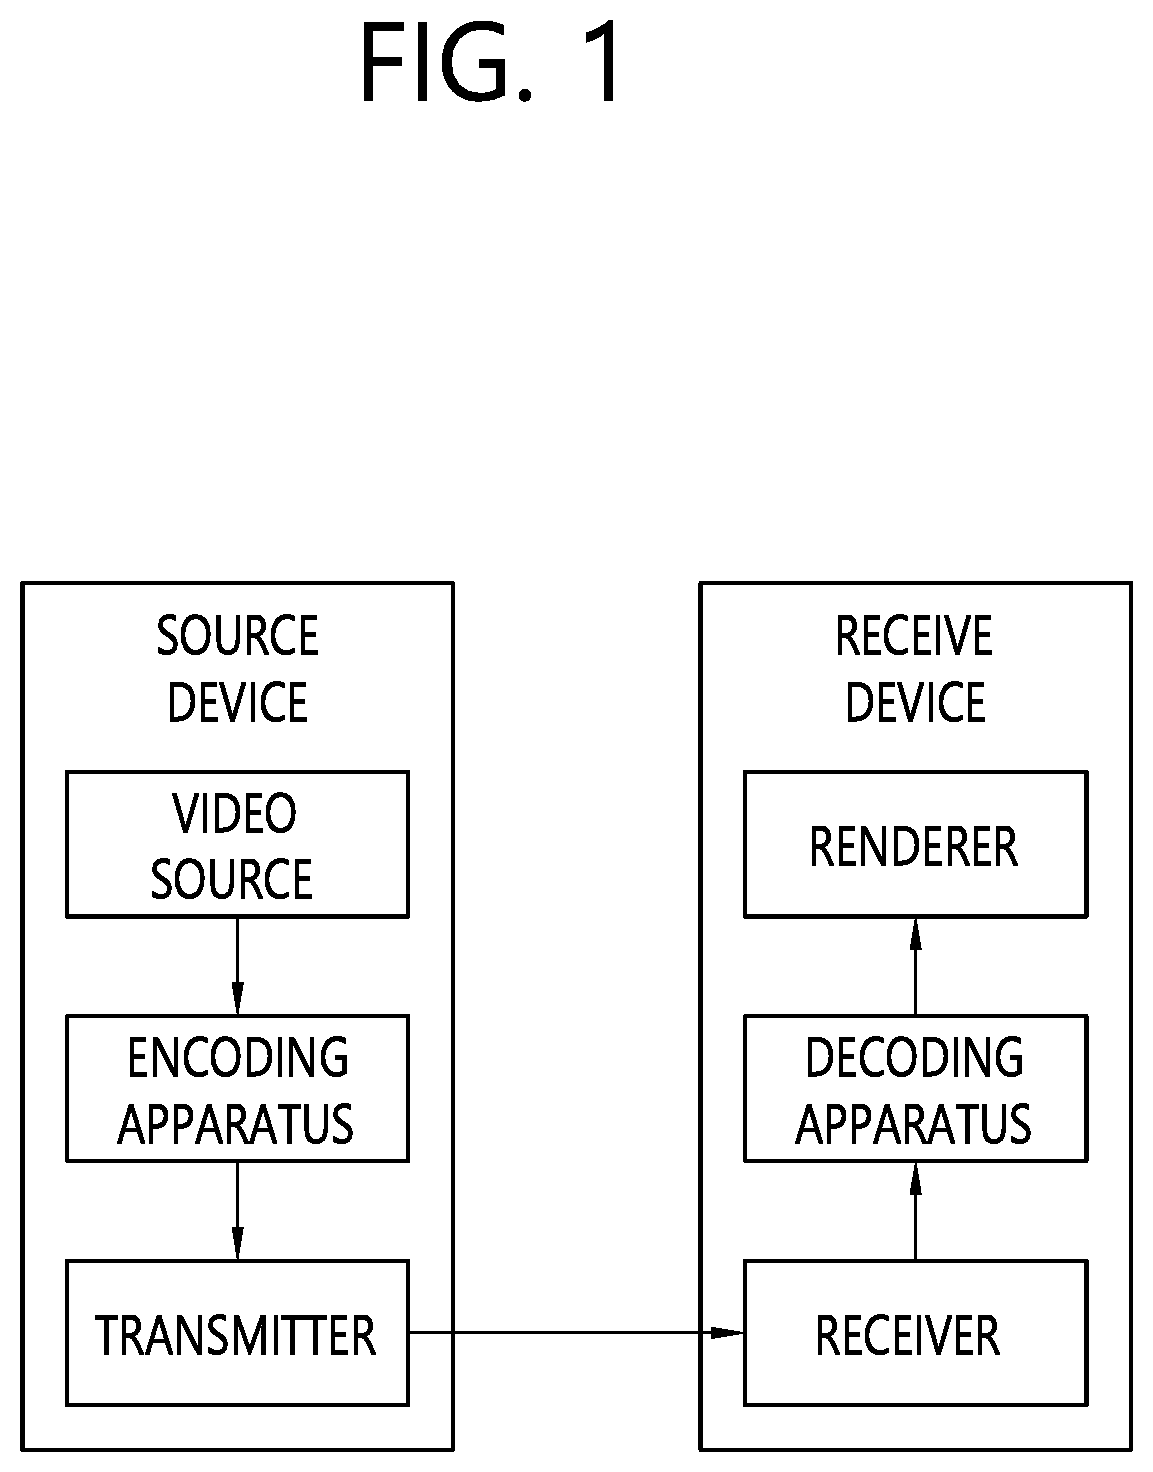 Residual coding method and device for same